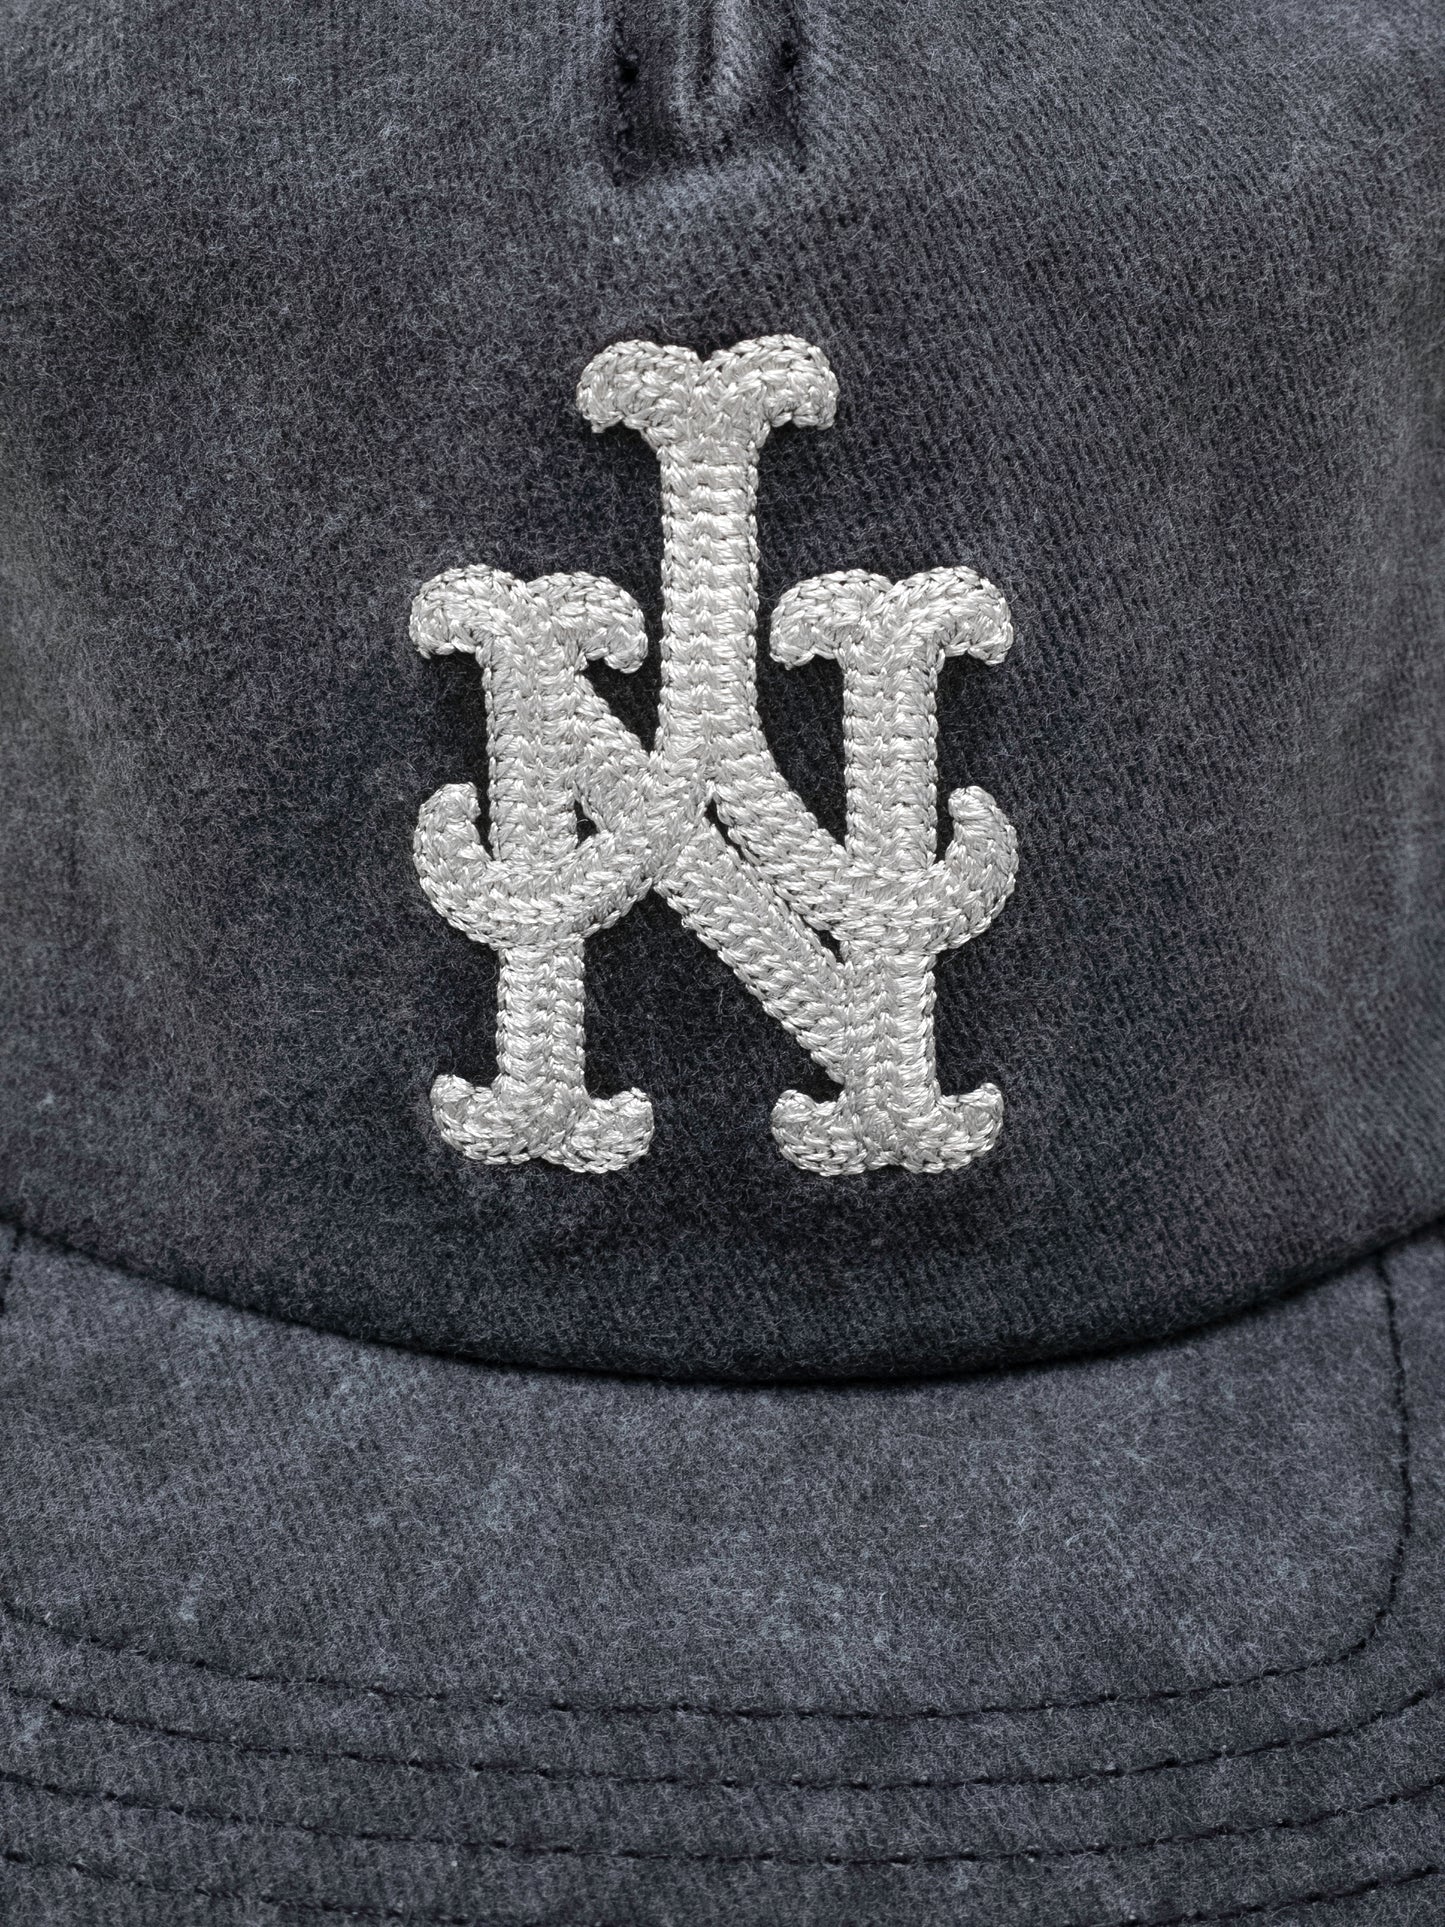 Classic Upside Down Mets Hat